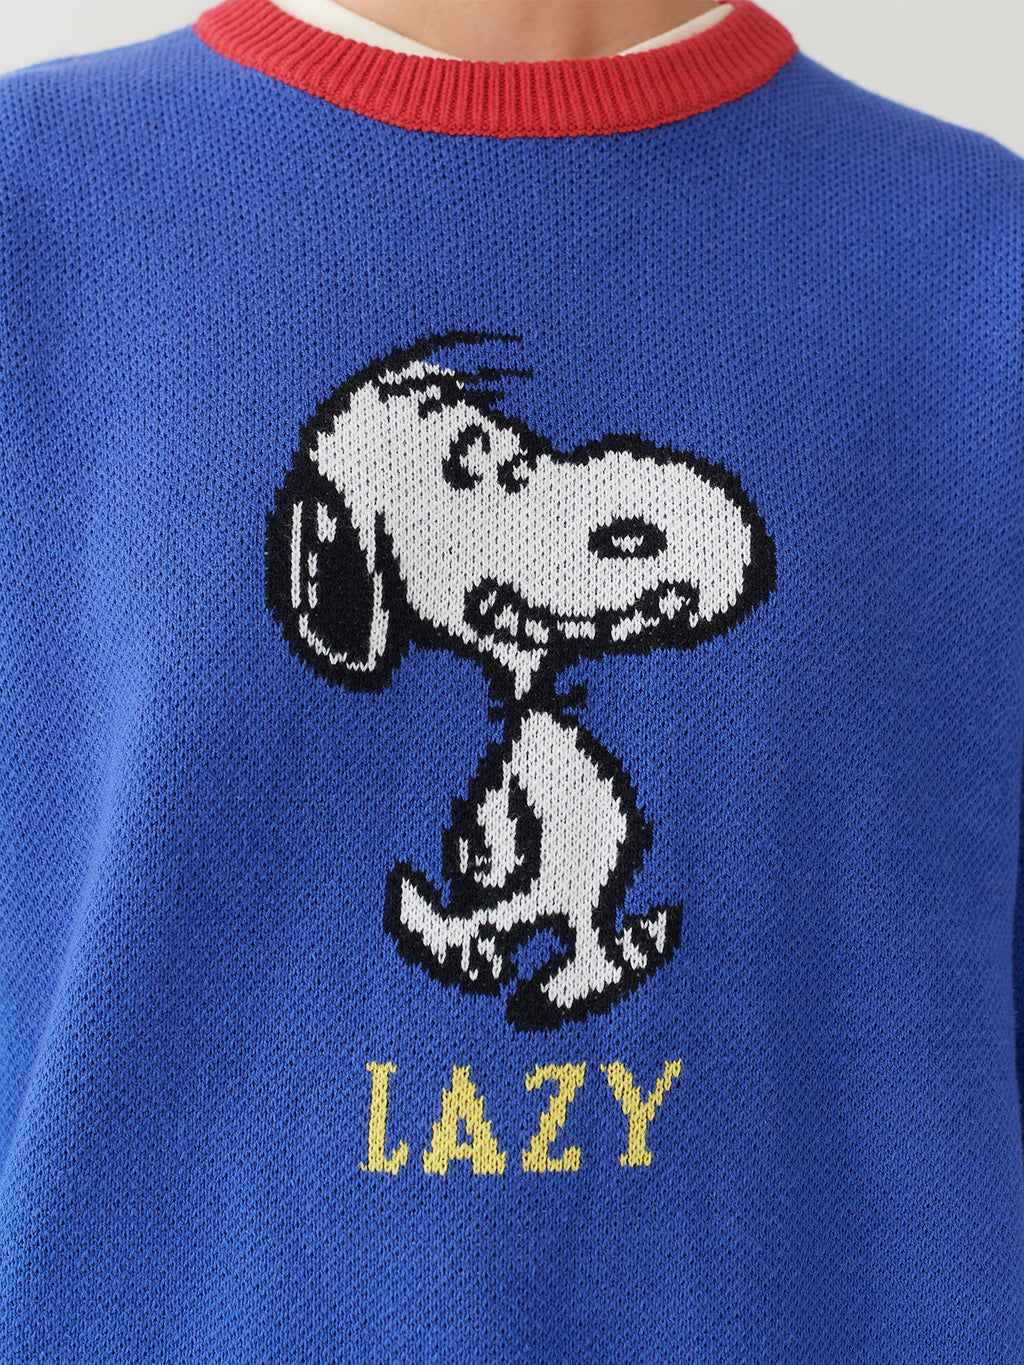 Lazy Oaf x Peanuts Lazy Snoopy Knit Sweater